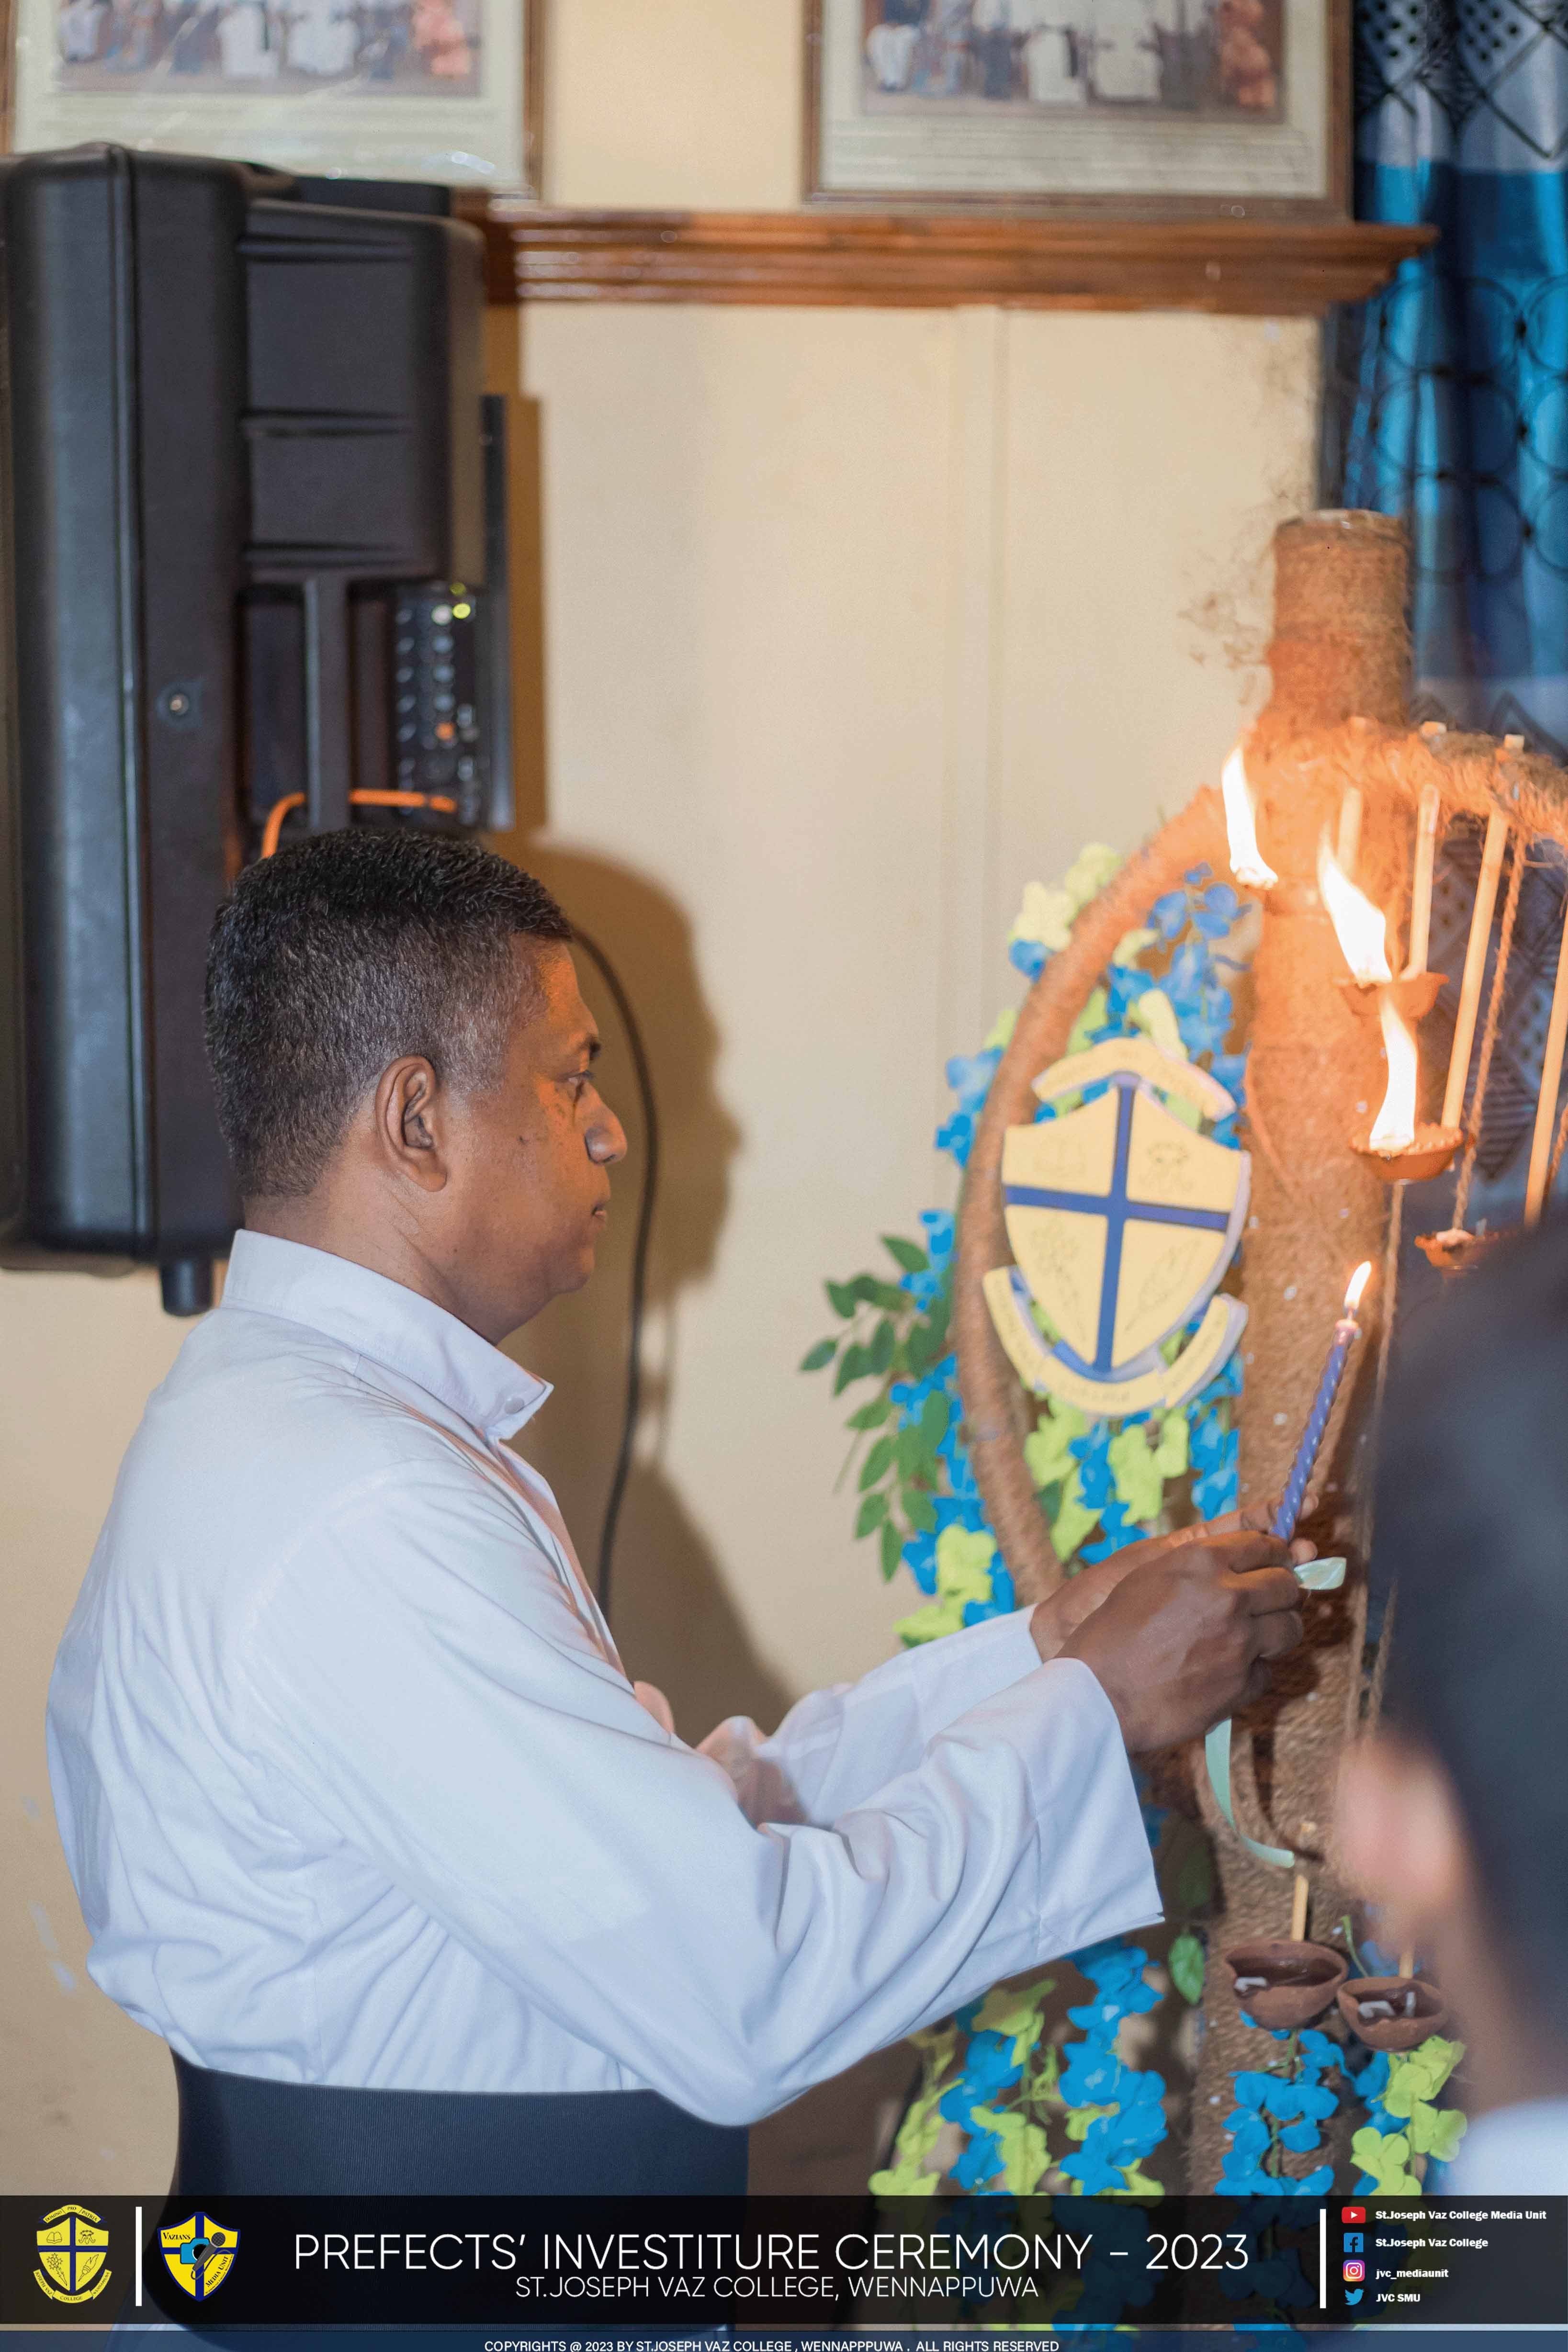 Prefects Investiture Ceremony - 2023 - St. Joseph Vaz College - Wennappuwa - Sri Lanka